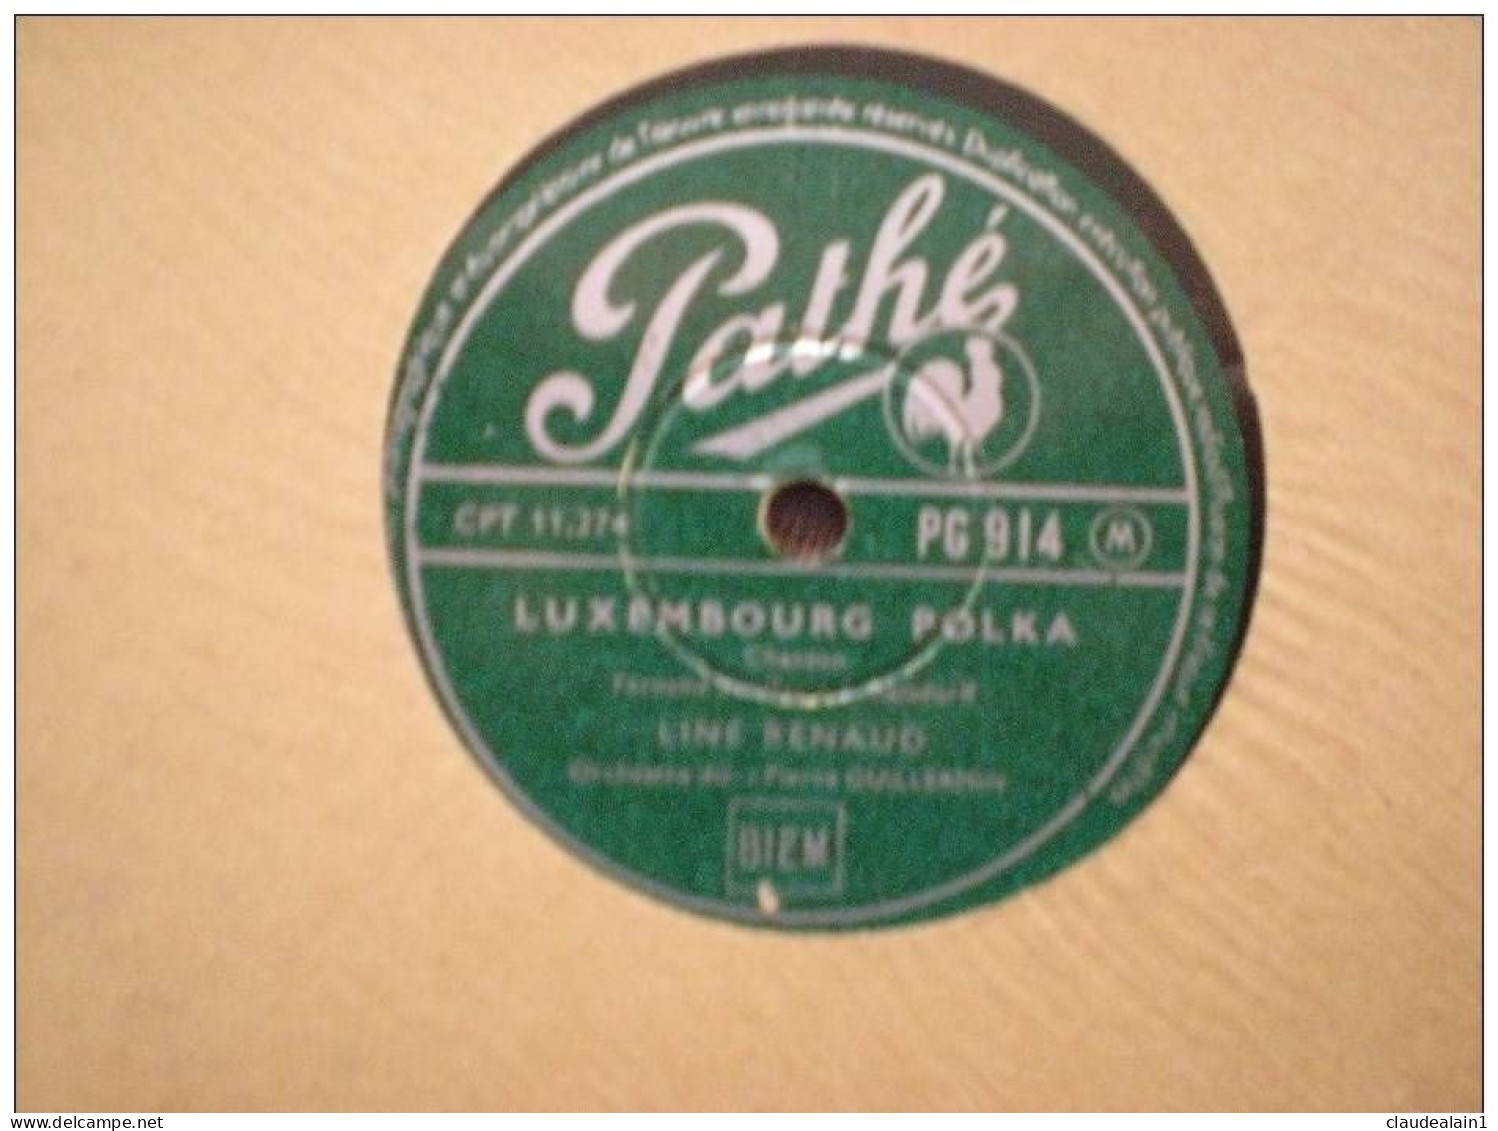 DISQUE PATHE VINYLE 78T - LINE RENAUD - LUXEMBOURG POLKA - PROTEGE-MOI - 78 G - Dischi Per Fonografi